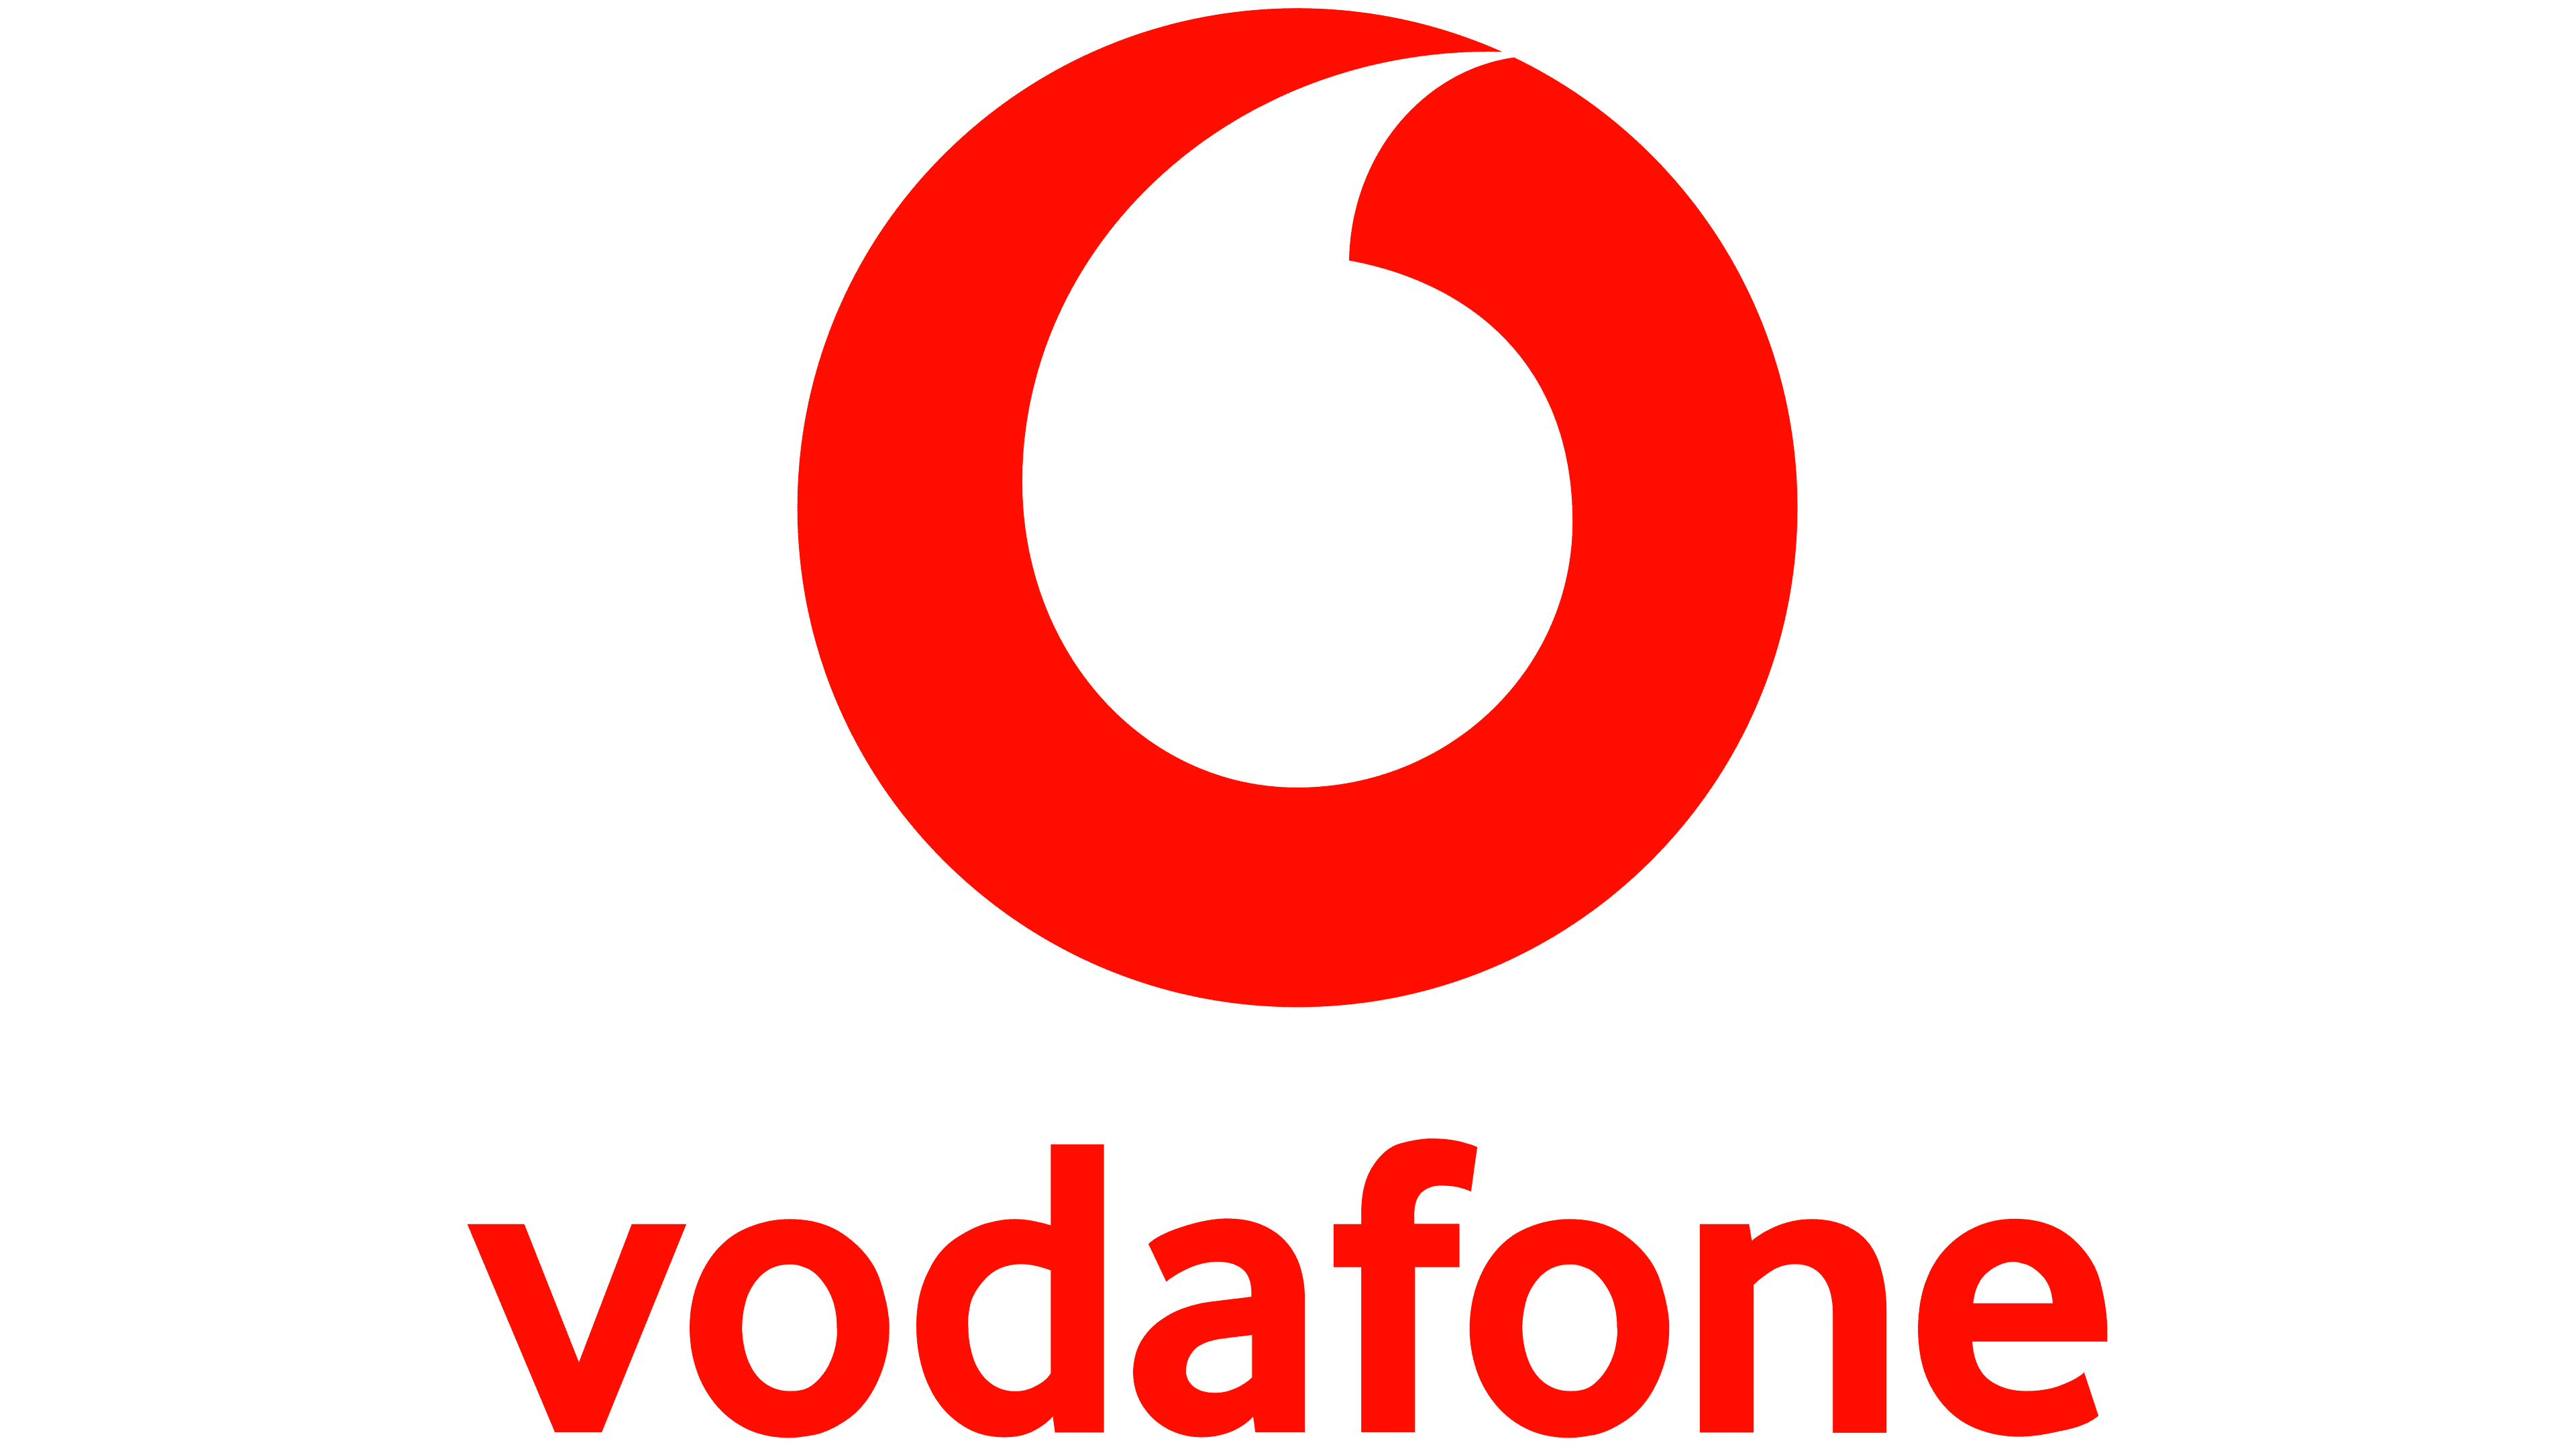 Vodafone Hungary Records HUF 7.4 Billion Loss